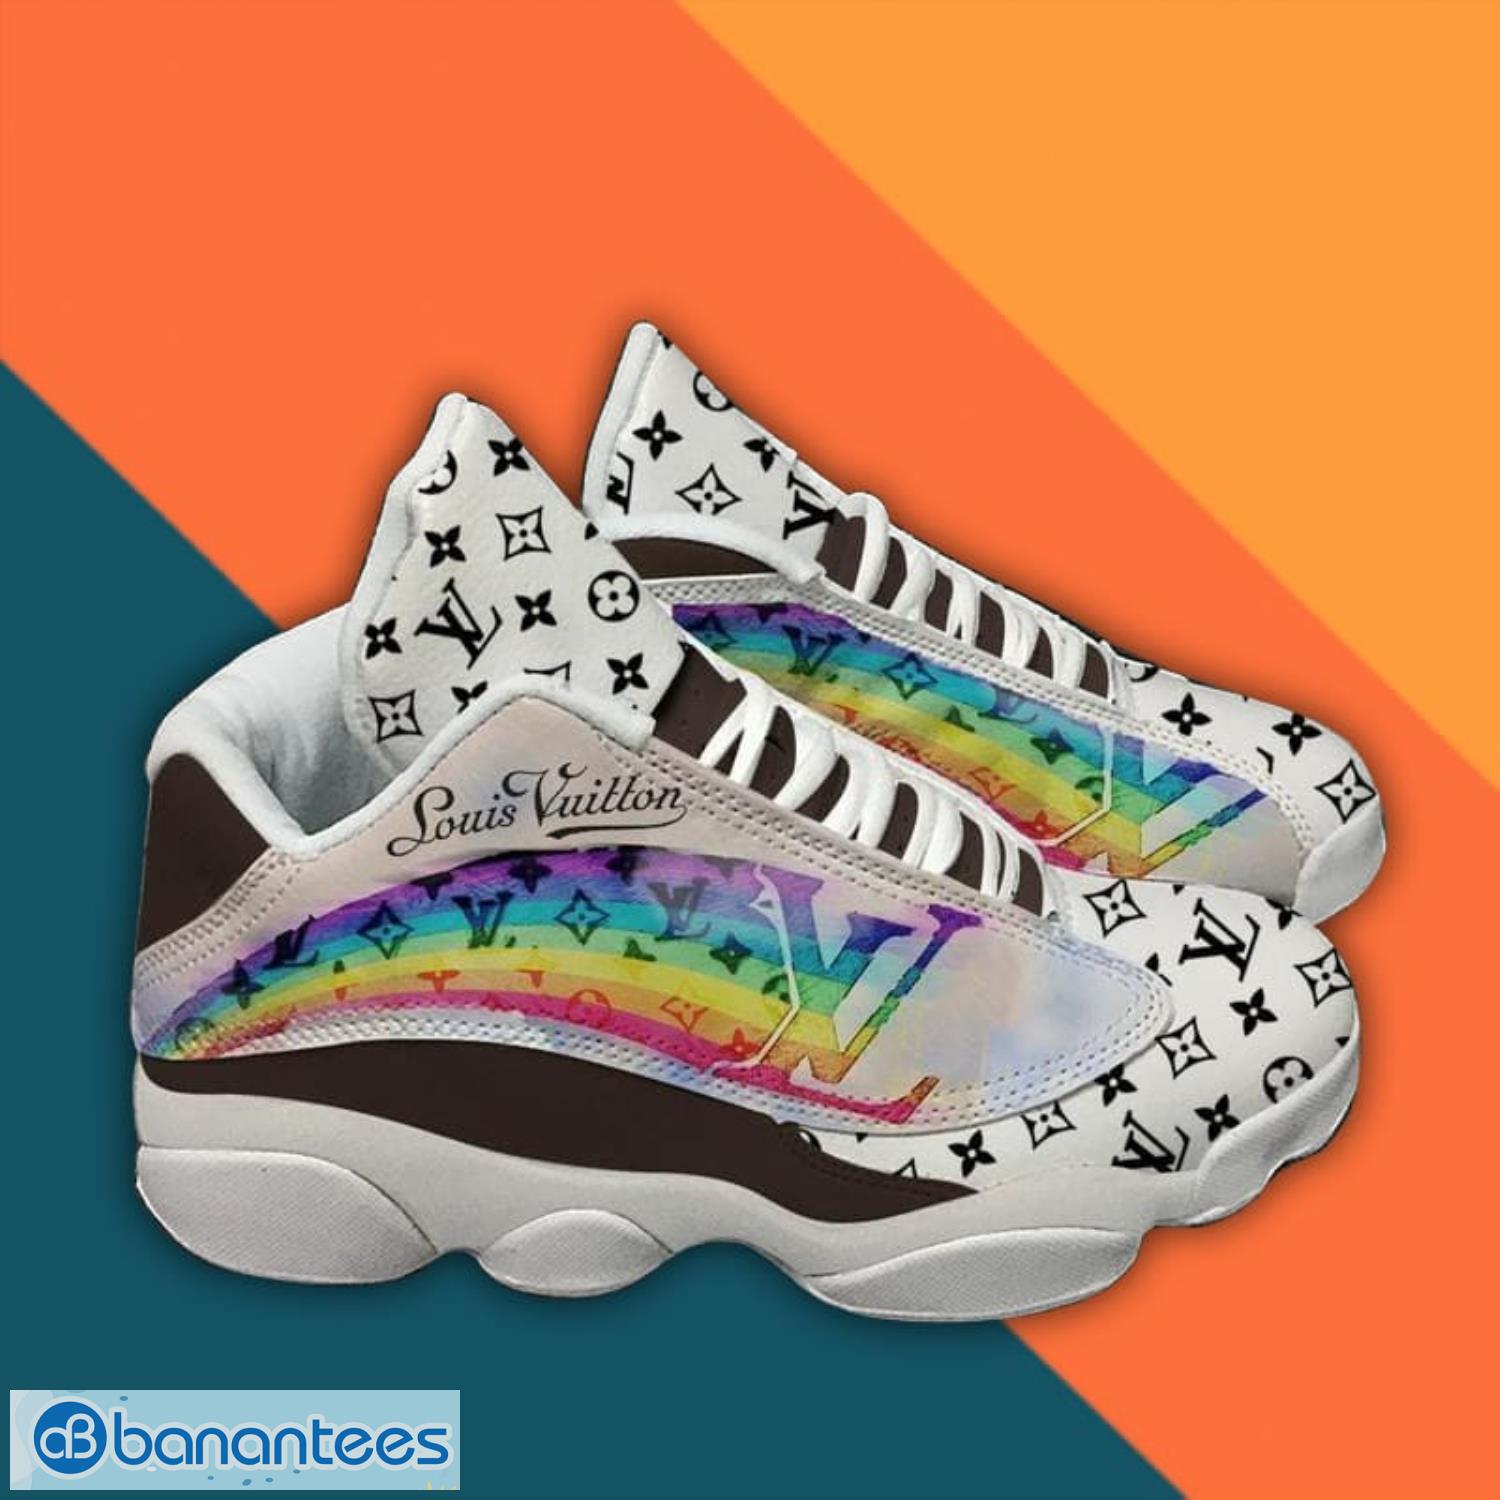 Louis Vuitton Rainbow Air Jordan 13 Sneaker Shoes Product Photo 3